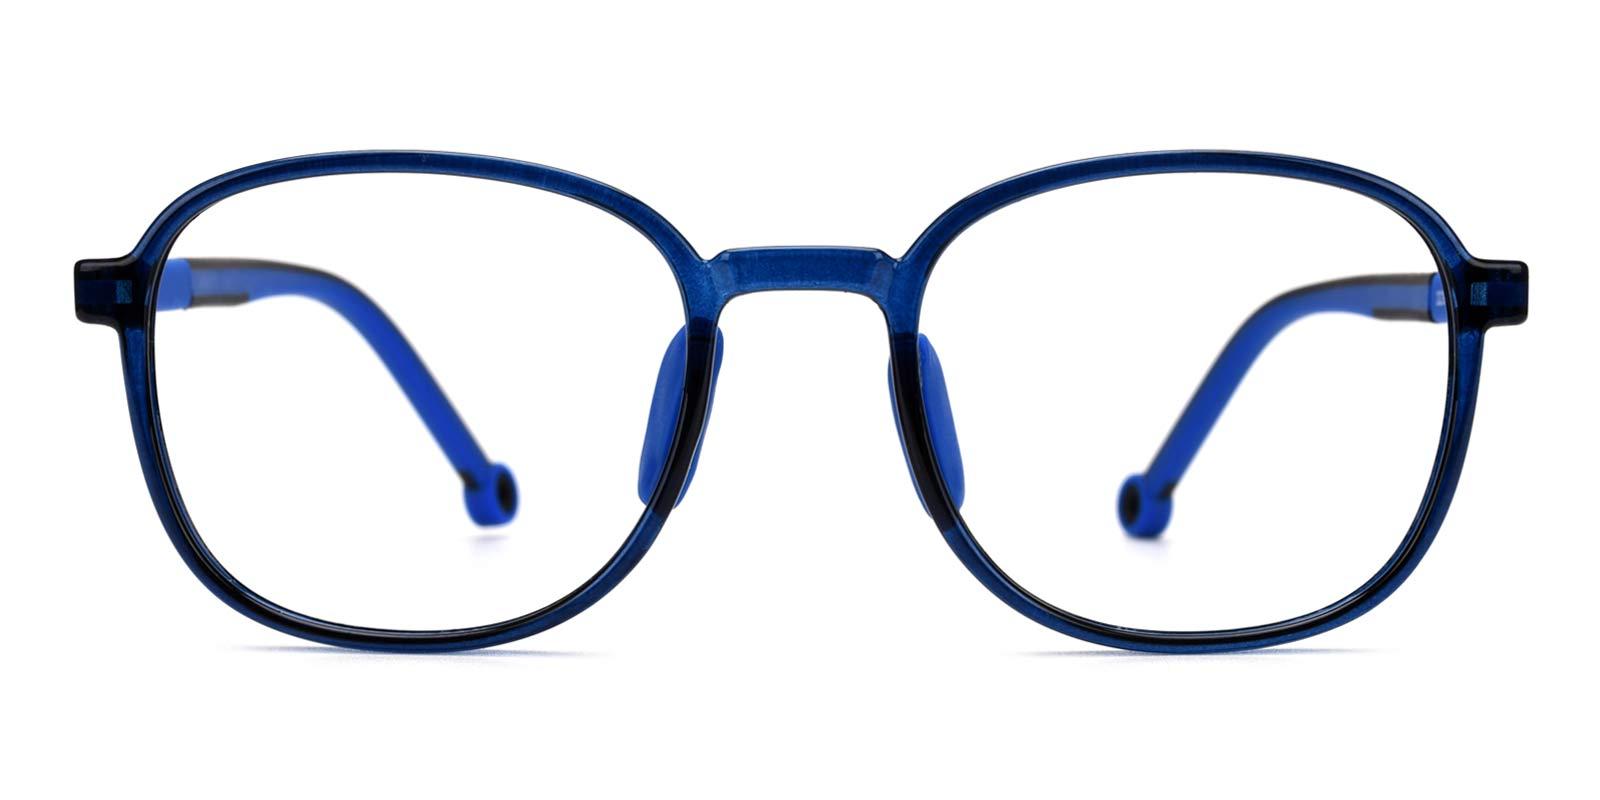 Warren-Translucent-Rectangle / Round-Plastic-Eyeglasses-detail